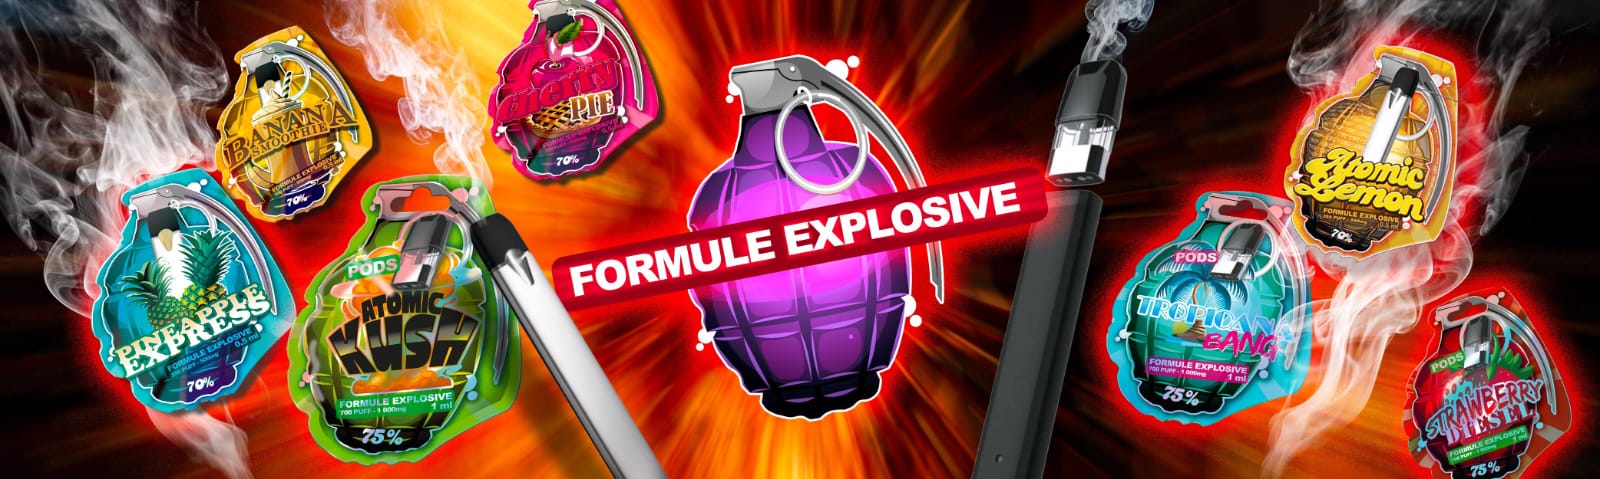 Explosieve formule